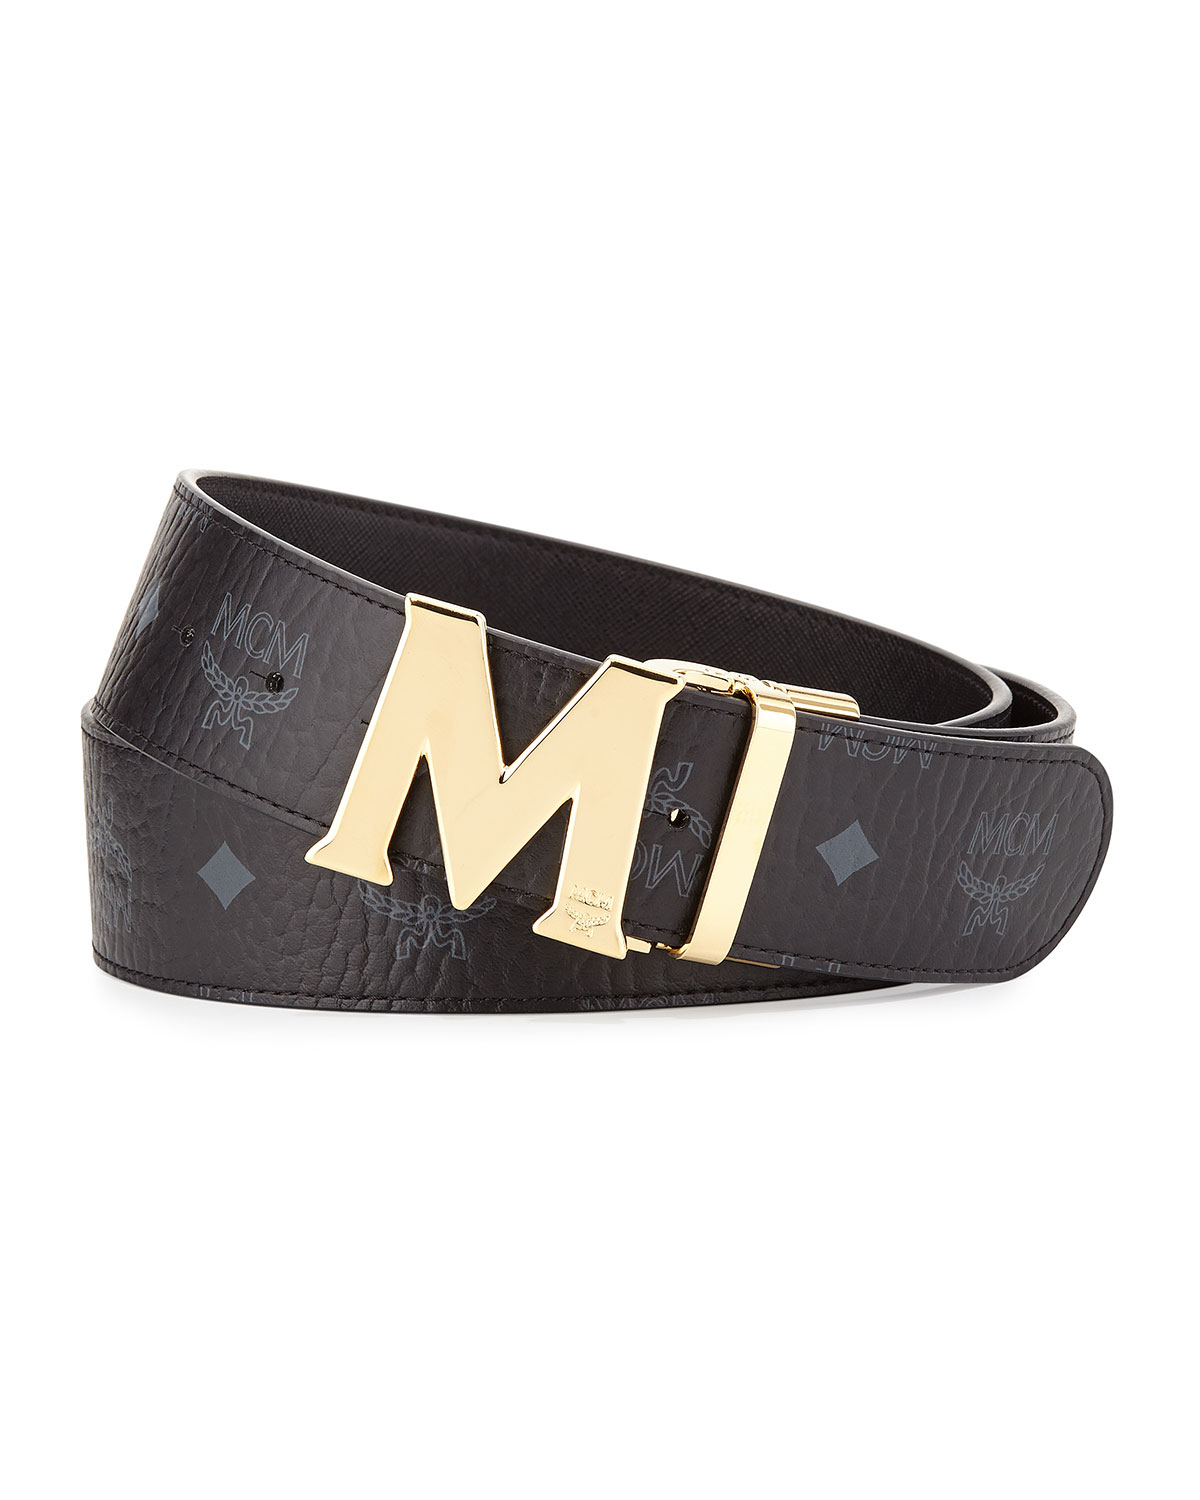 Lyst - Mcm M-buckle Monogram Belt in Black for Men